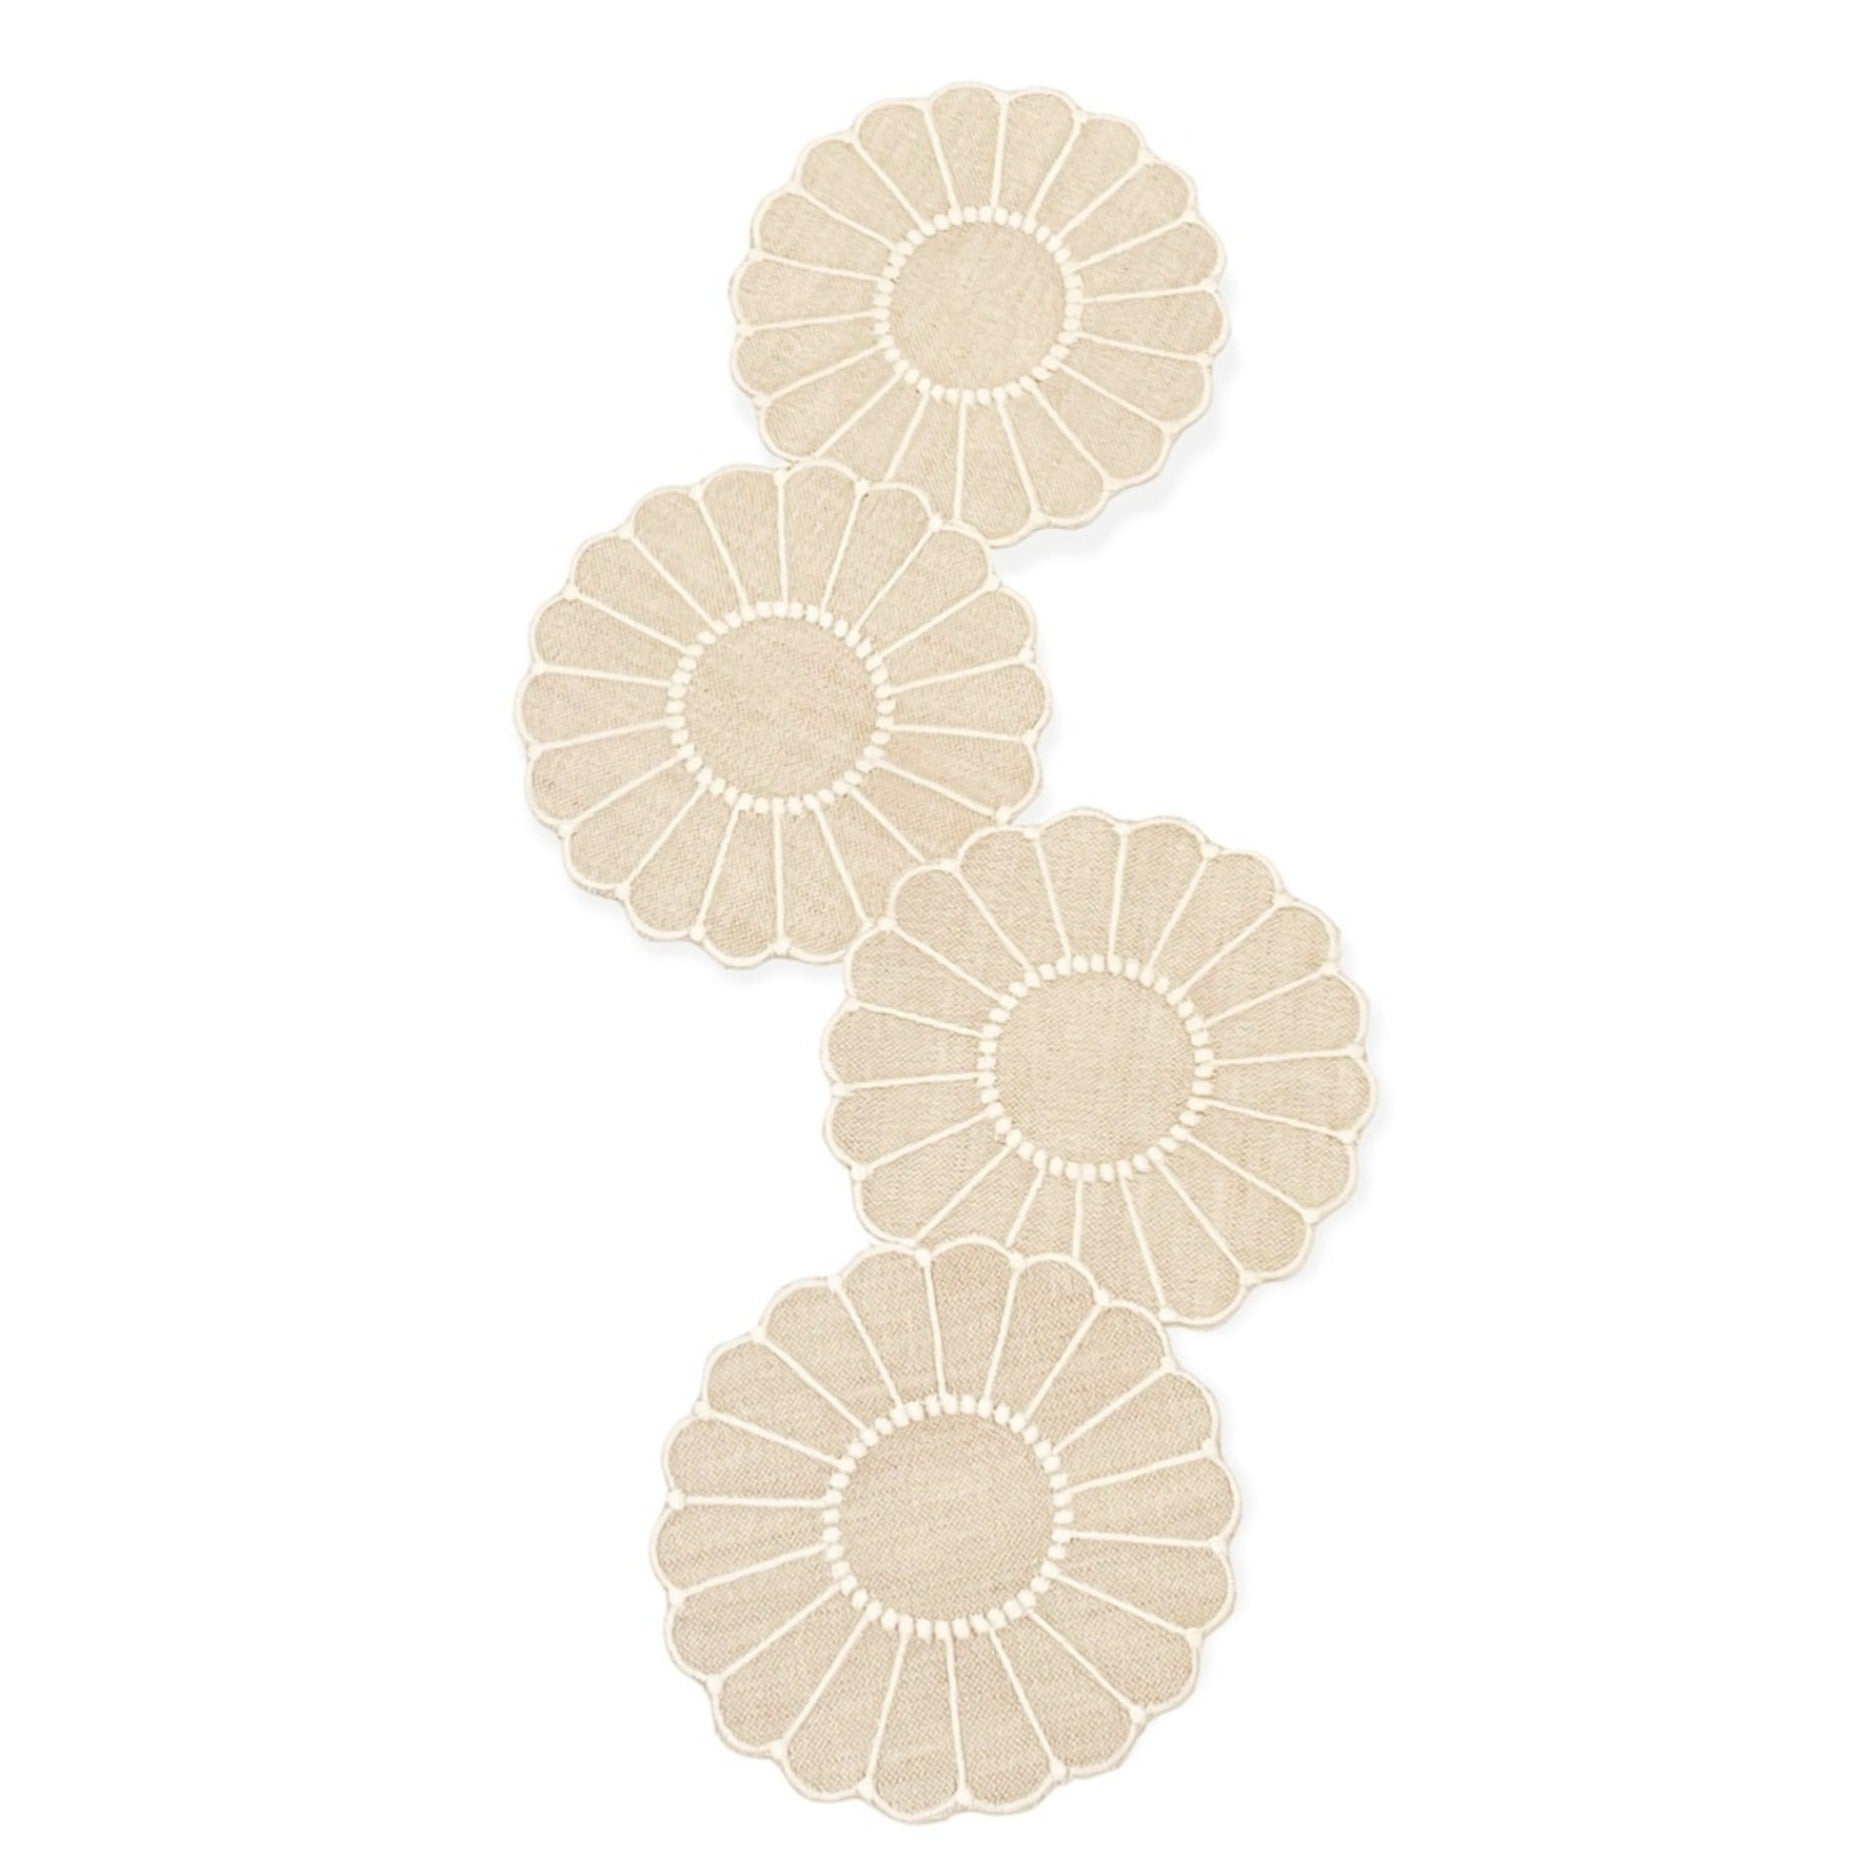 Linen Scalloped Coasters - Tan (Set of 4)